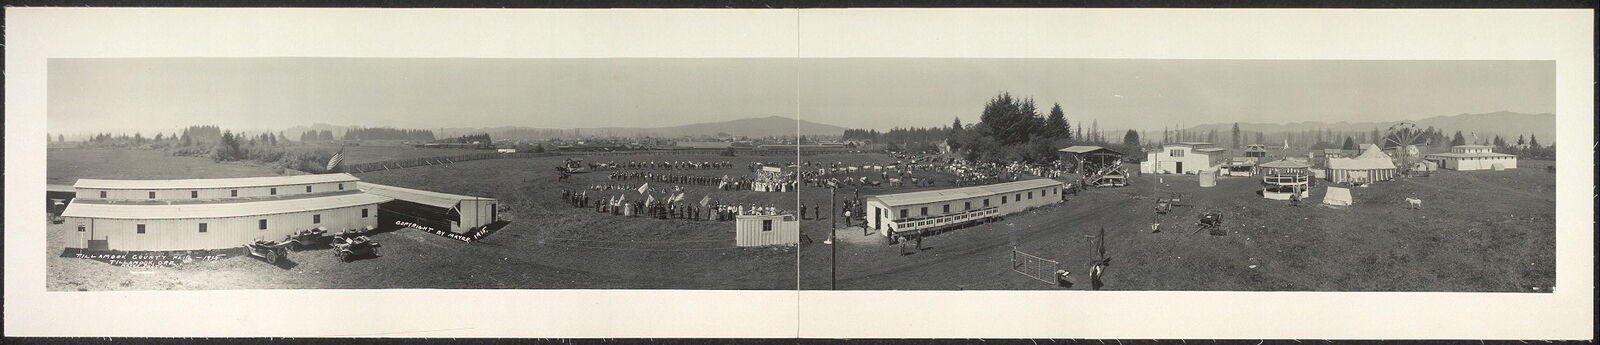 Photo:1915 Panoramic: Tillamook County Fair,1915,Tillamook,Oregon 97141